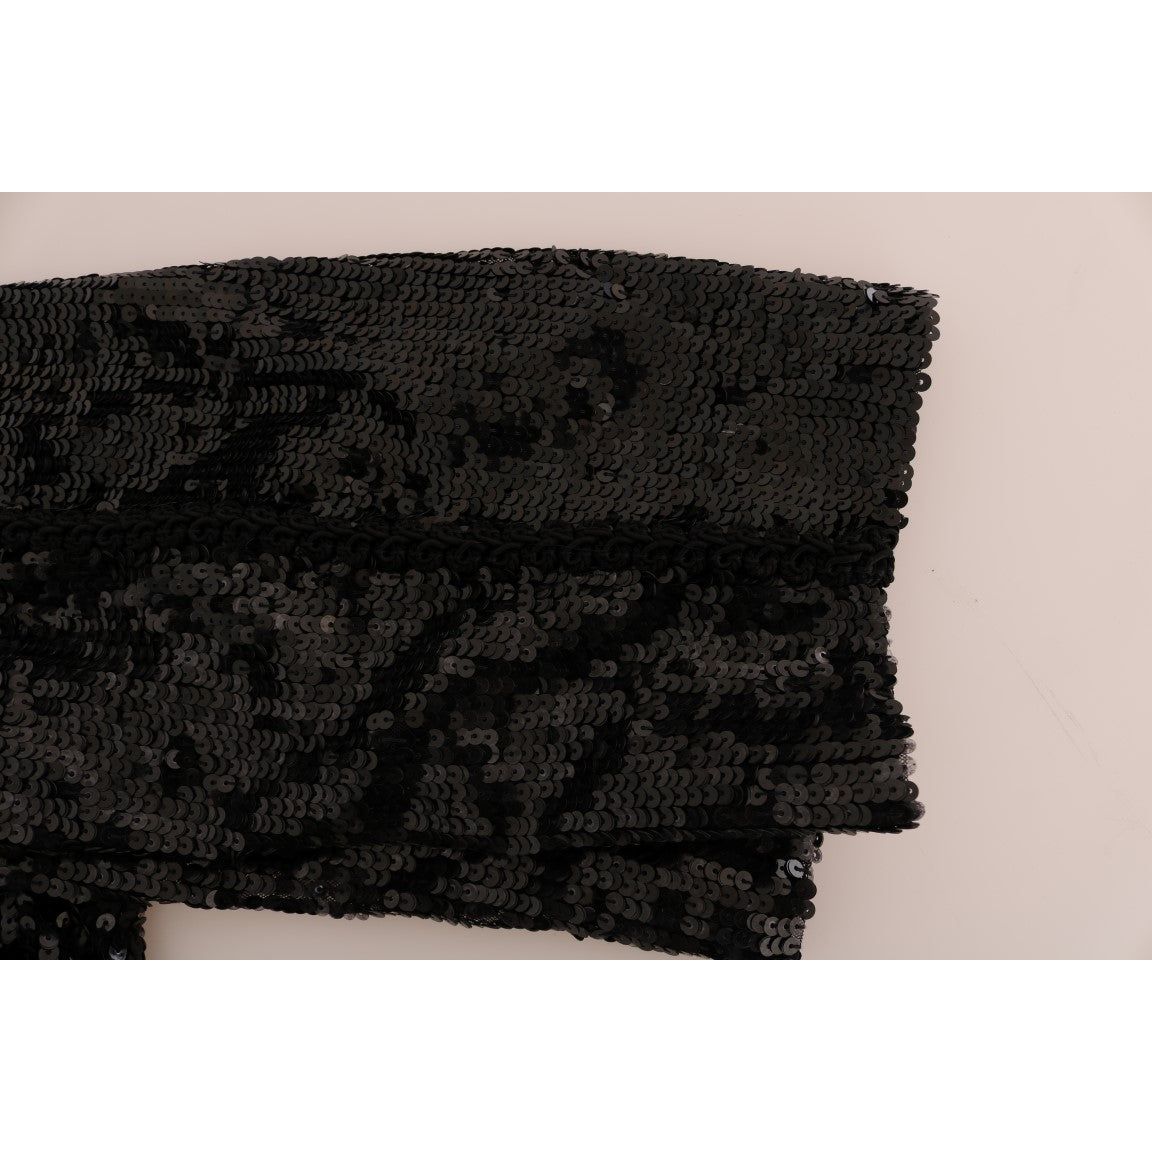 Dolce & Gabbana Elegant Bermuda Tailored Shorts black-sequined-fashion-shorts